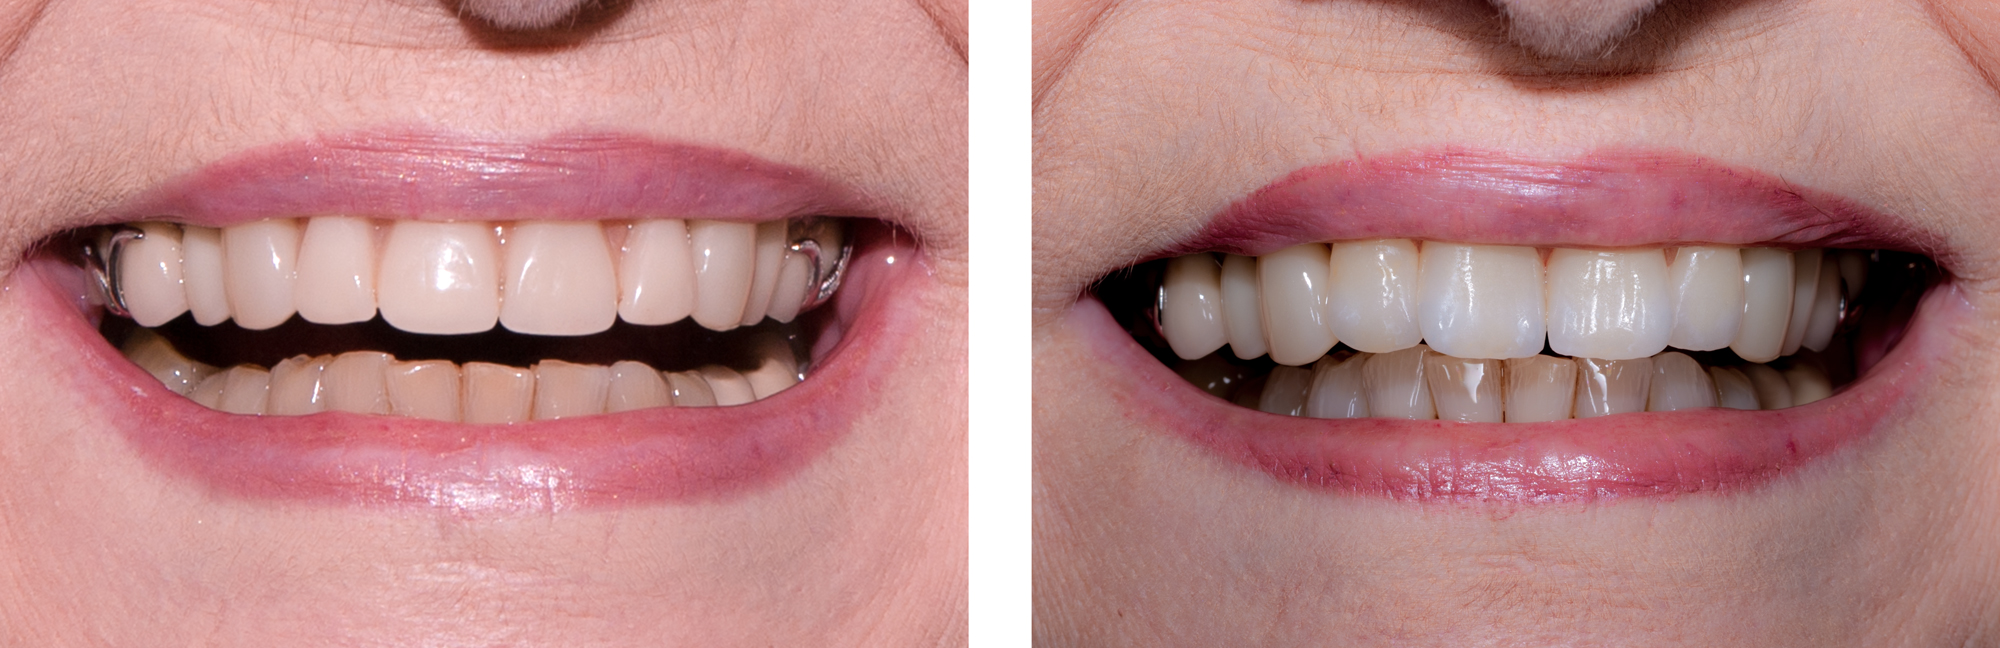 Four-ceramic-hand-made-front-teeth-on-a-Metal-Partial-denture_Ron_Winter_Seasade_Dental_Laboratory.jpg